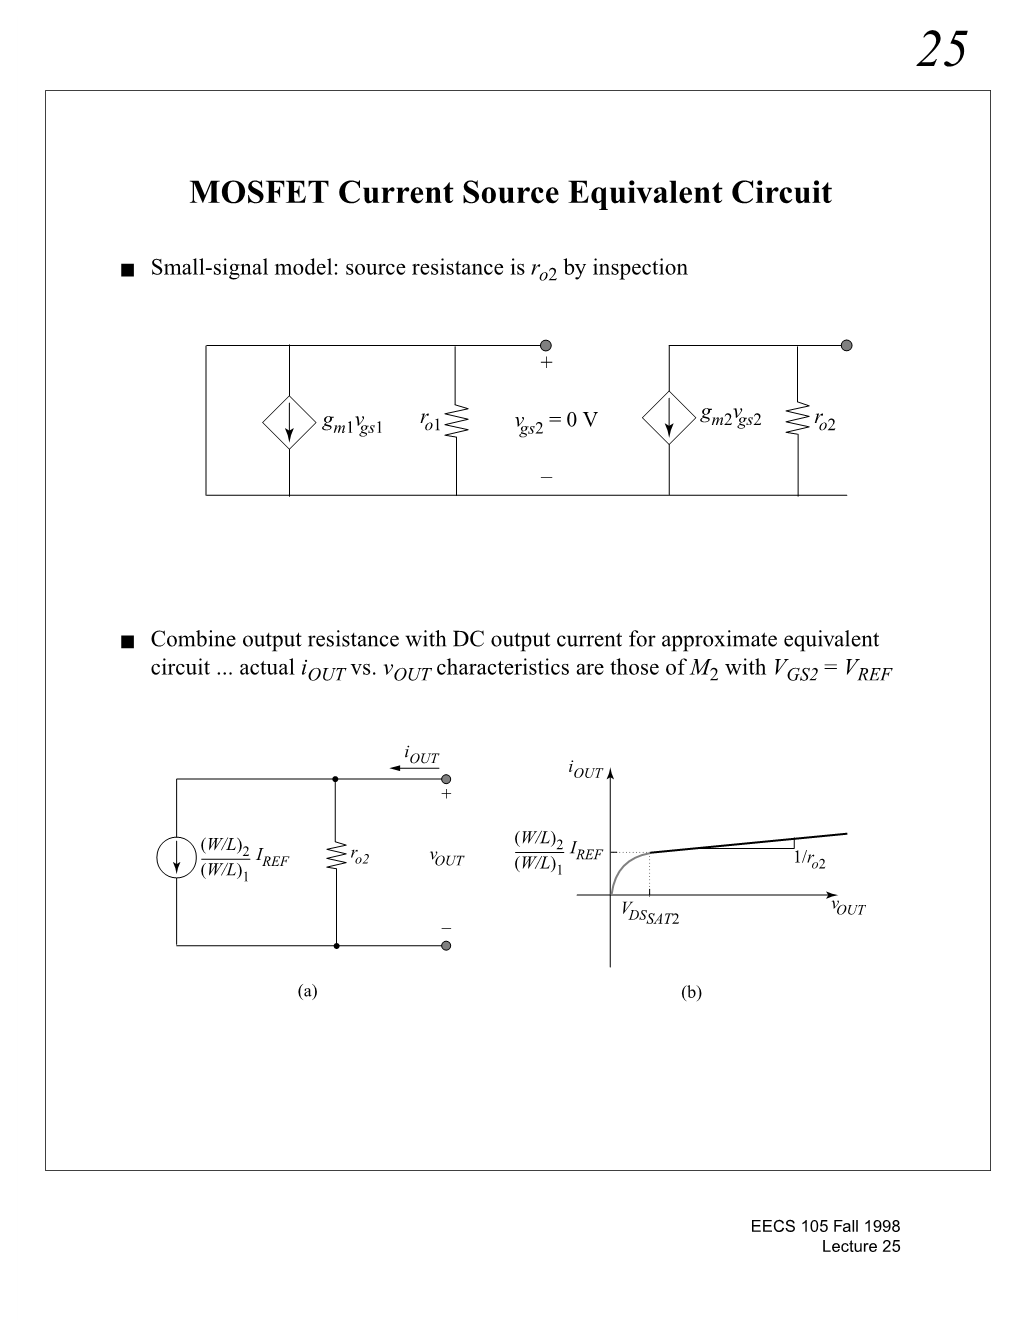 MOSFET Current Source Equivalent Circuit